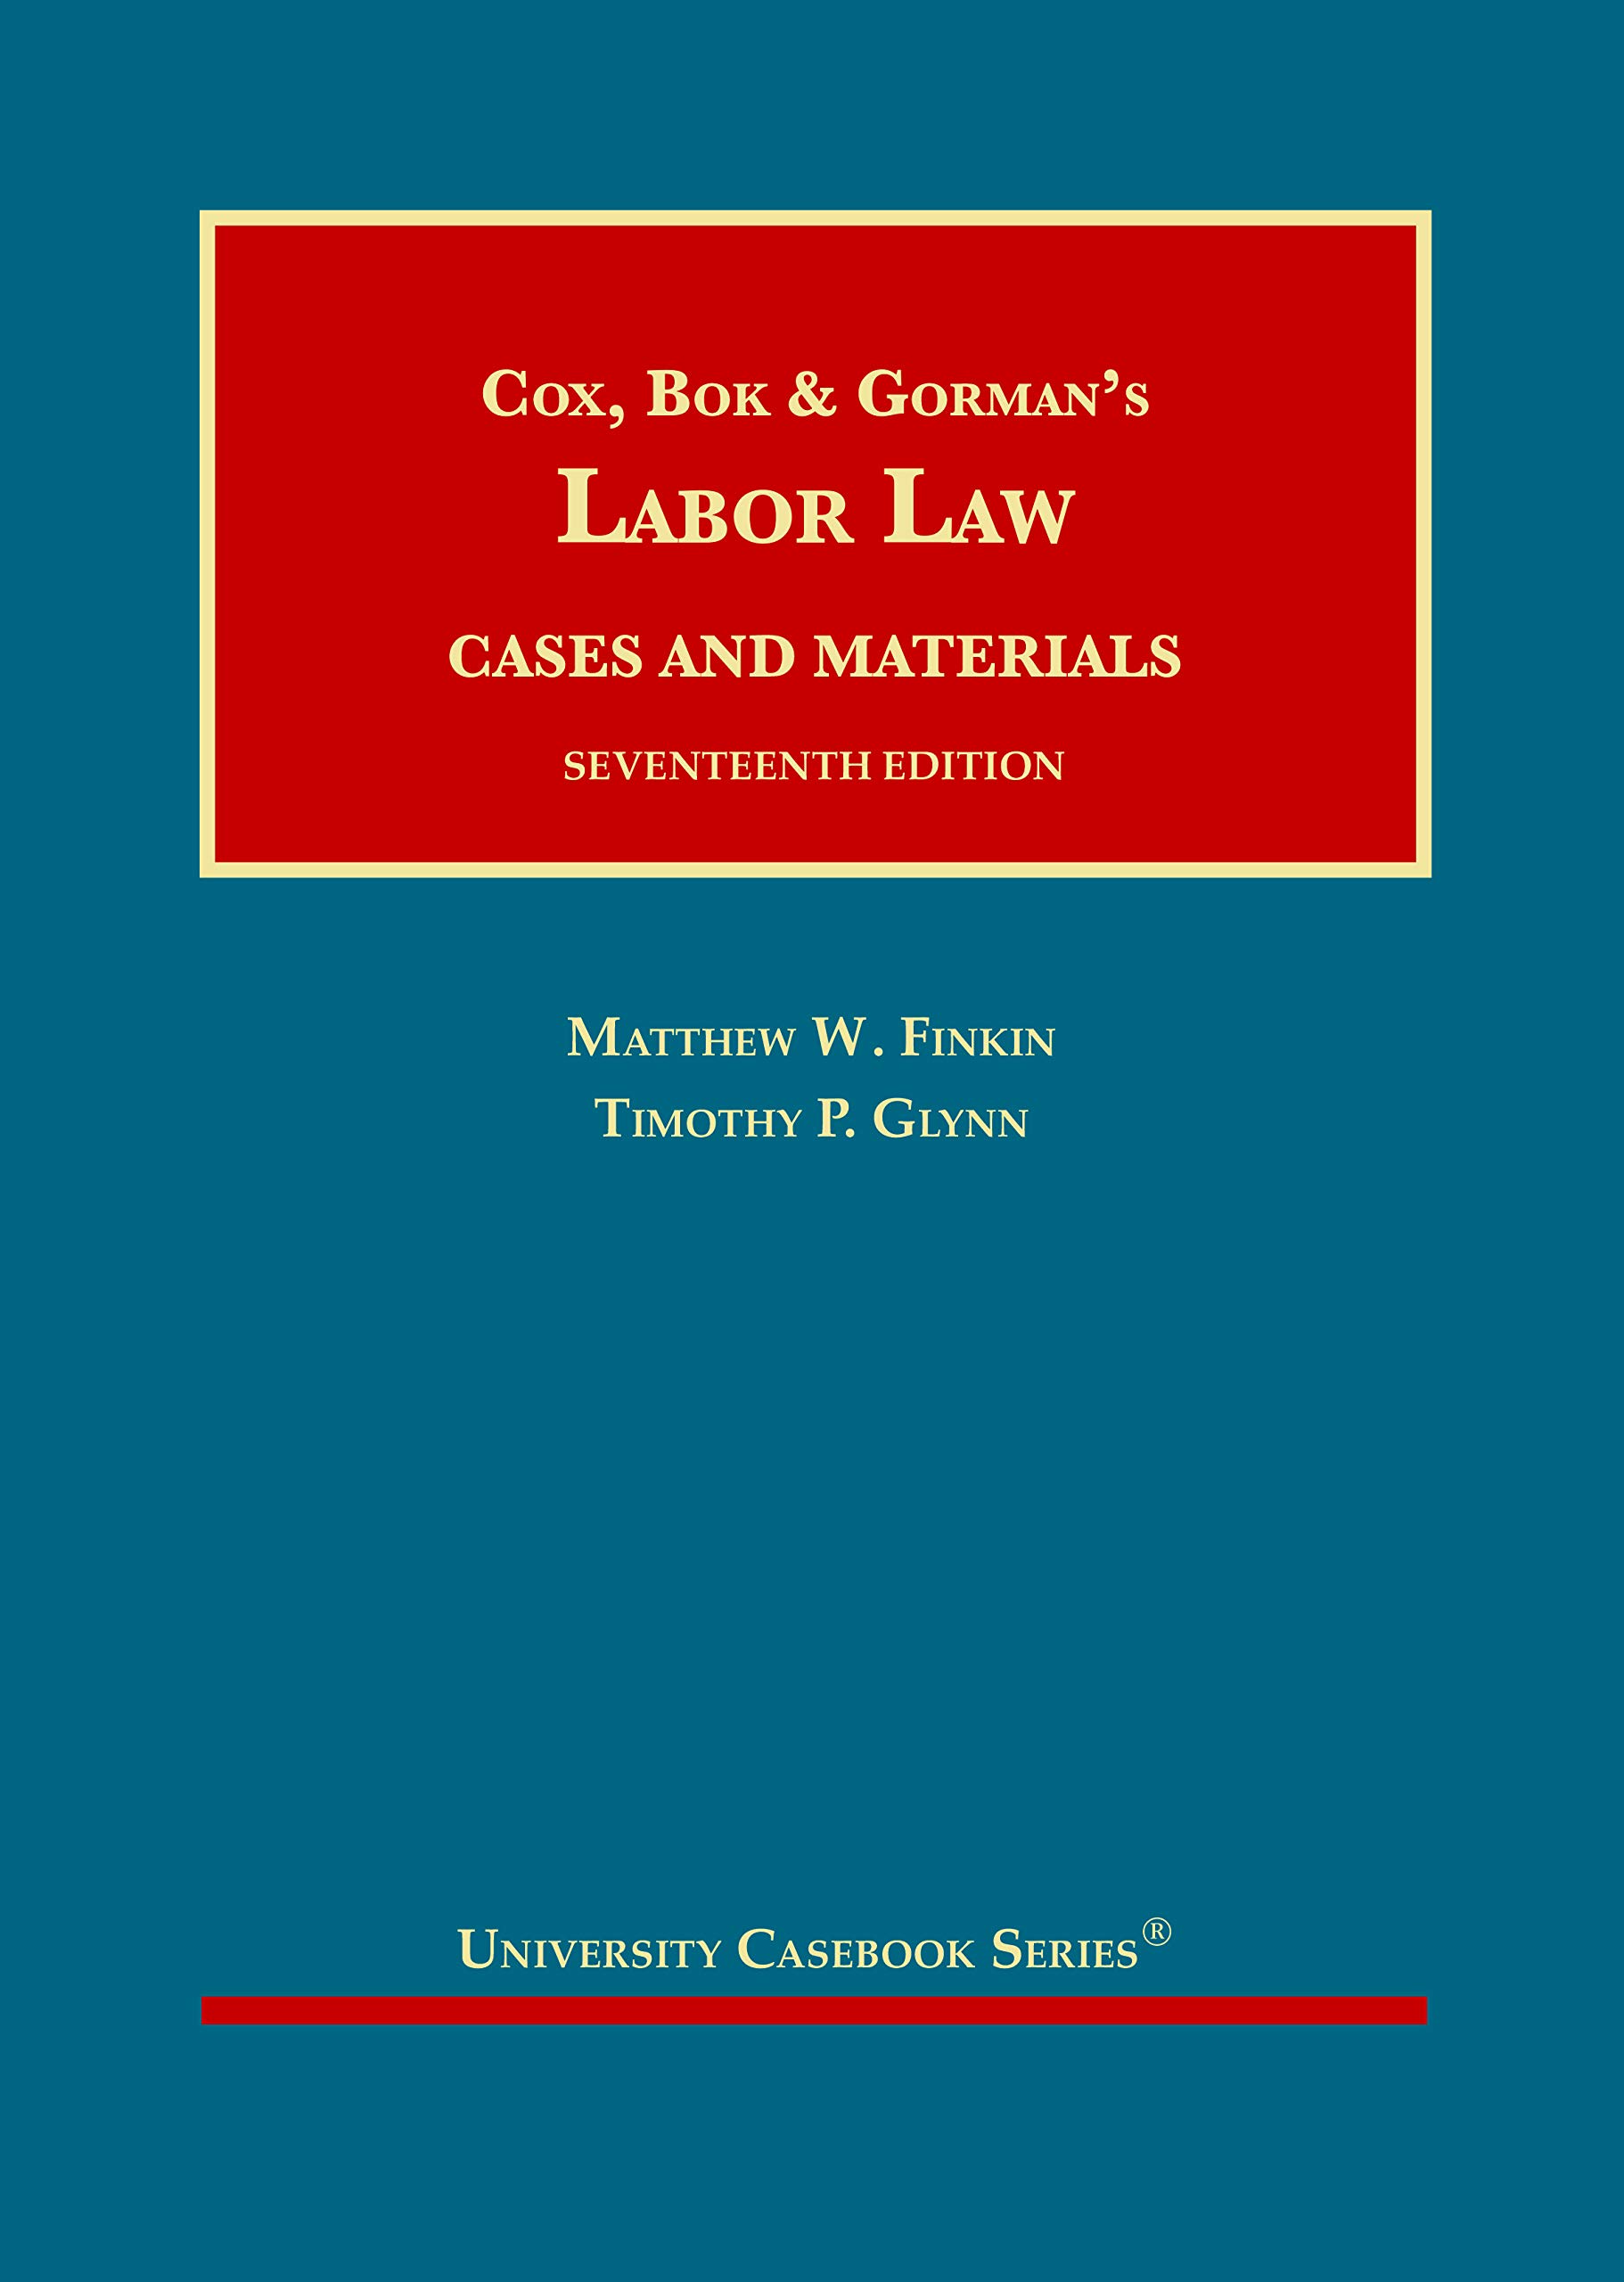 Cox, Bok & Gorman’s Labor Law (University Casebook Series)